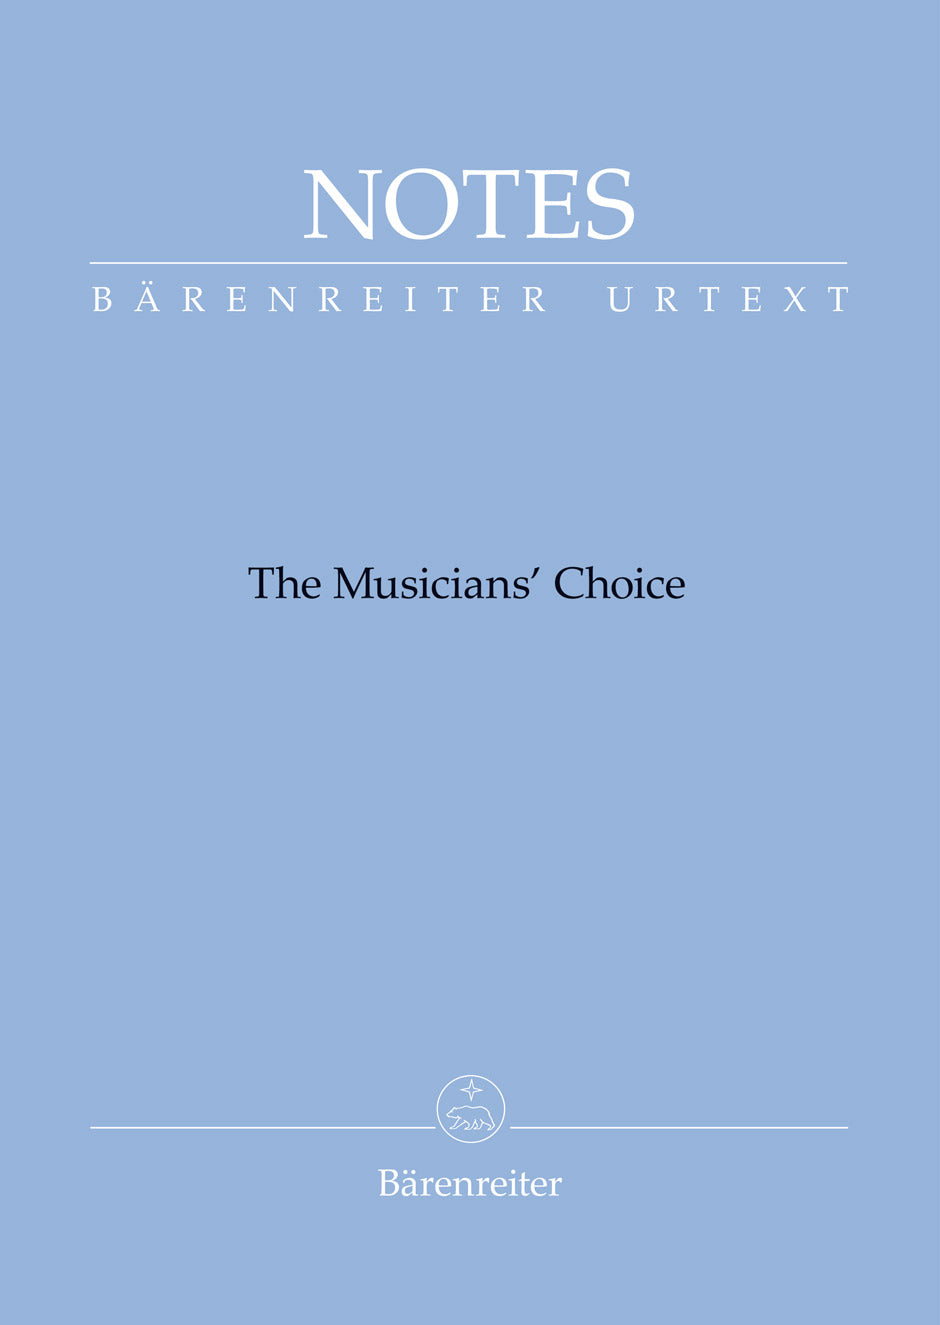 Bärenreiter: The Musician's Choice Notebook - Blue Cover